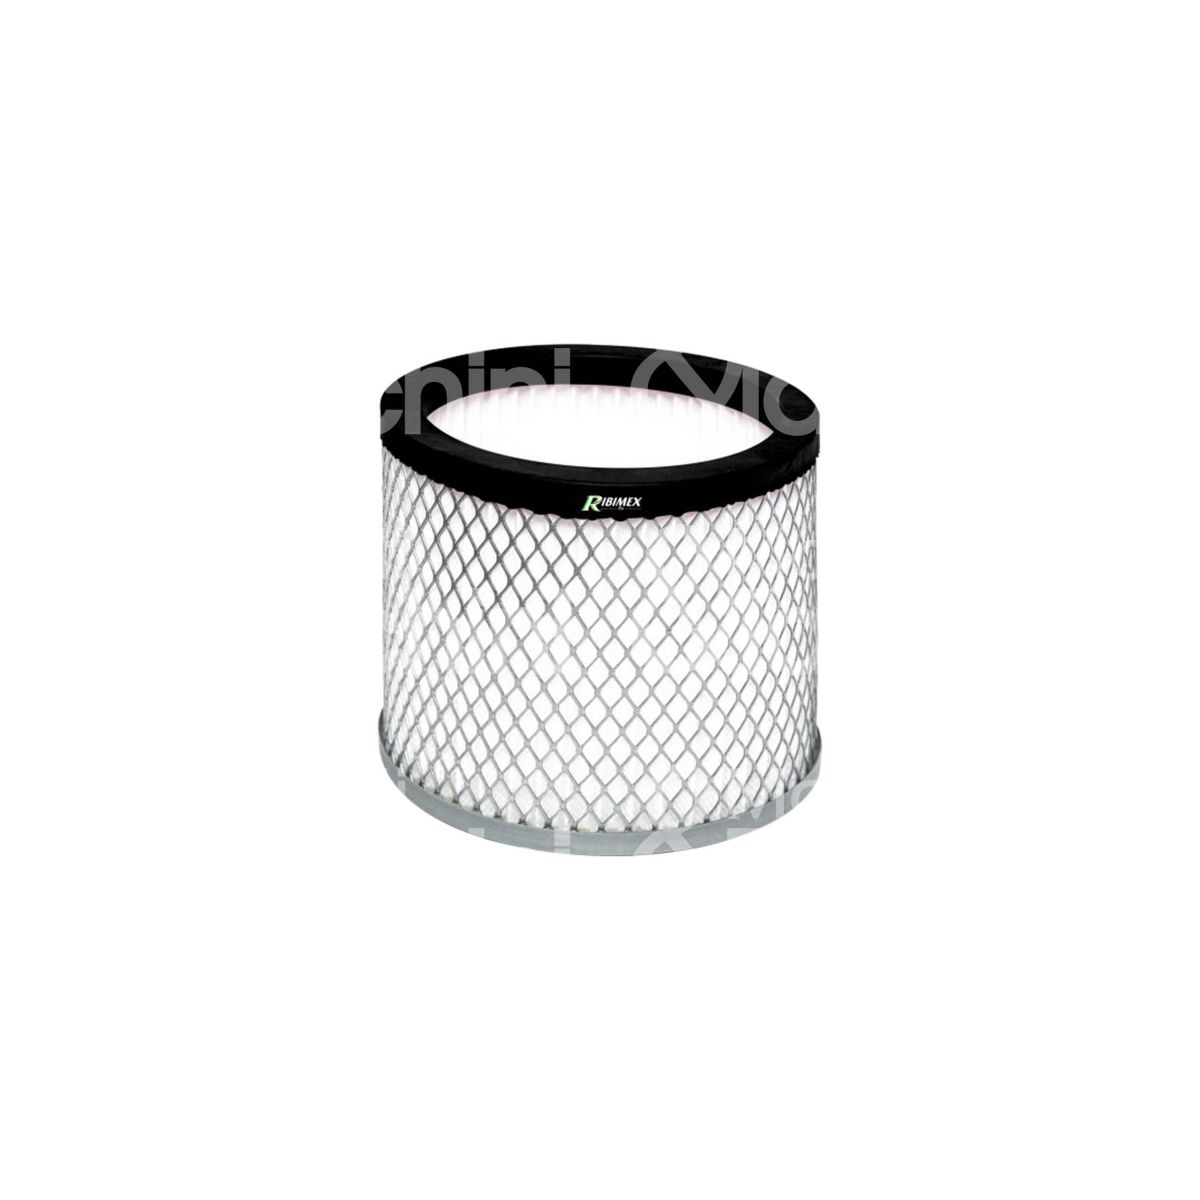 Ribimex prcen011 filtro per aspiracenere art. prcen011/hepa misura 140 x  145 x 145 mm MALFATTI&TACCHINI GROUP